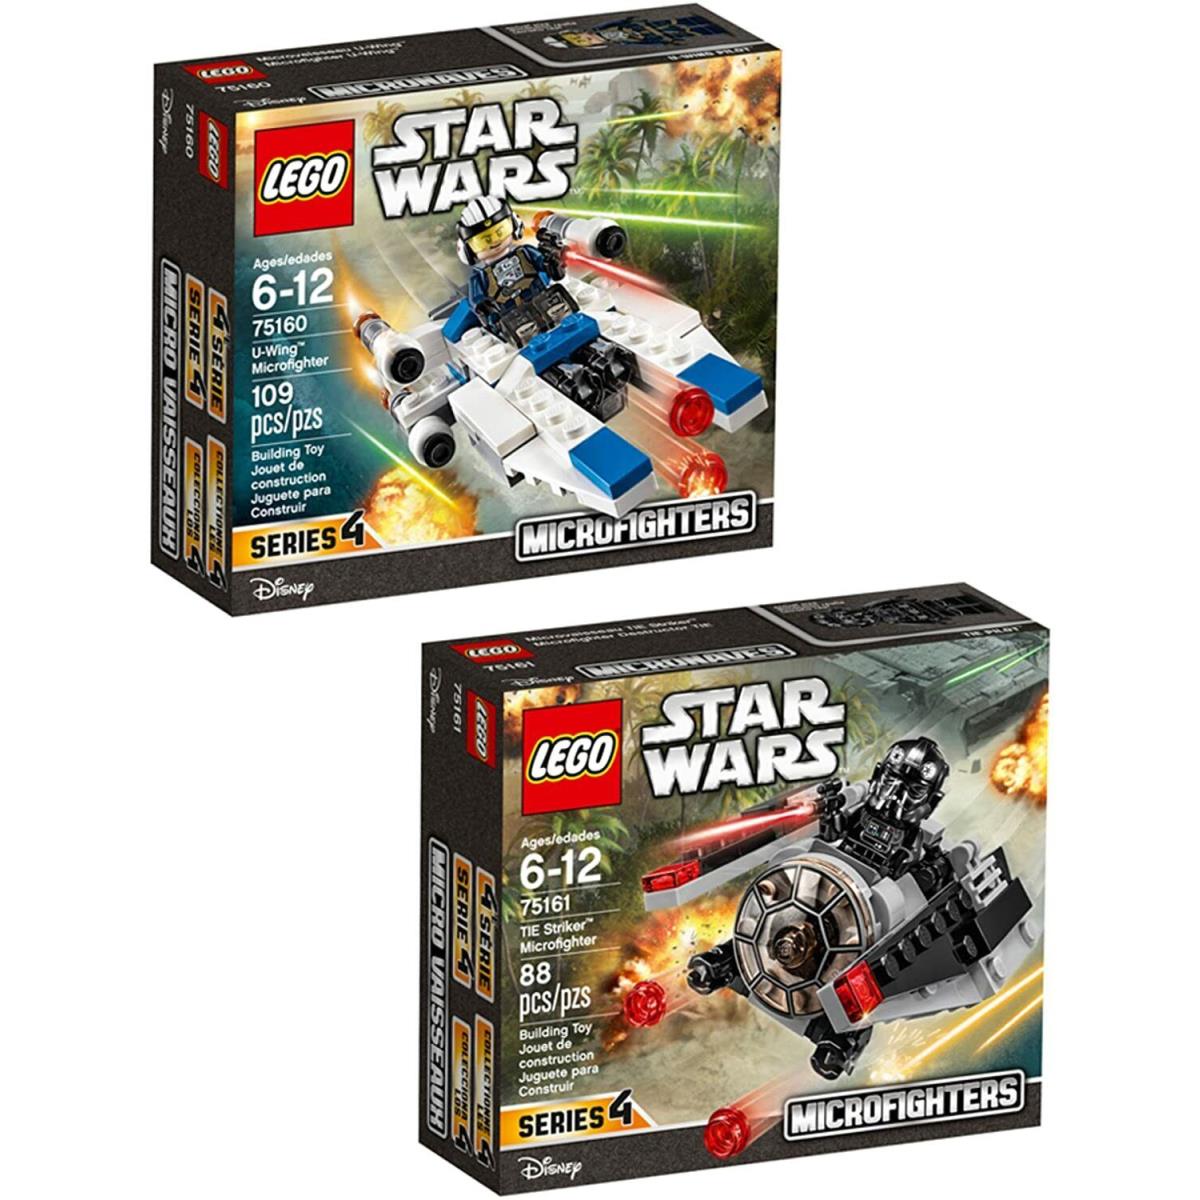 Lego Star Wars 66576 Building Kit Bundle 197 Piece Sets 75160 and 75161